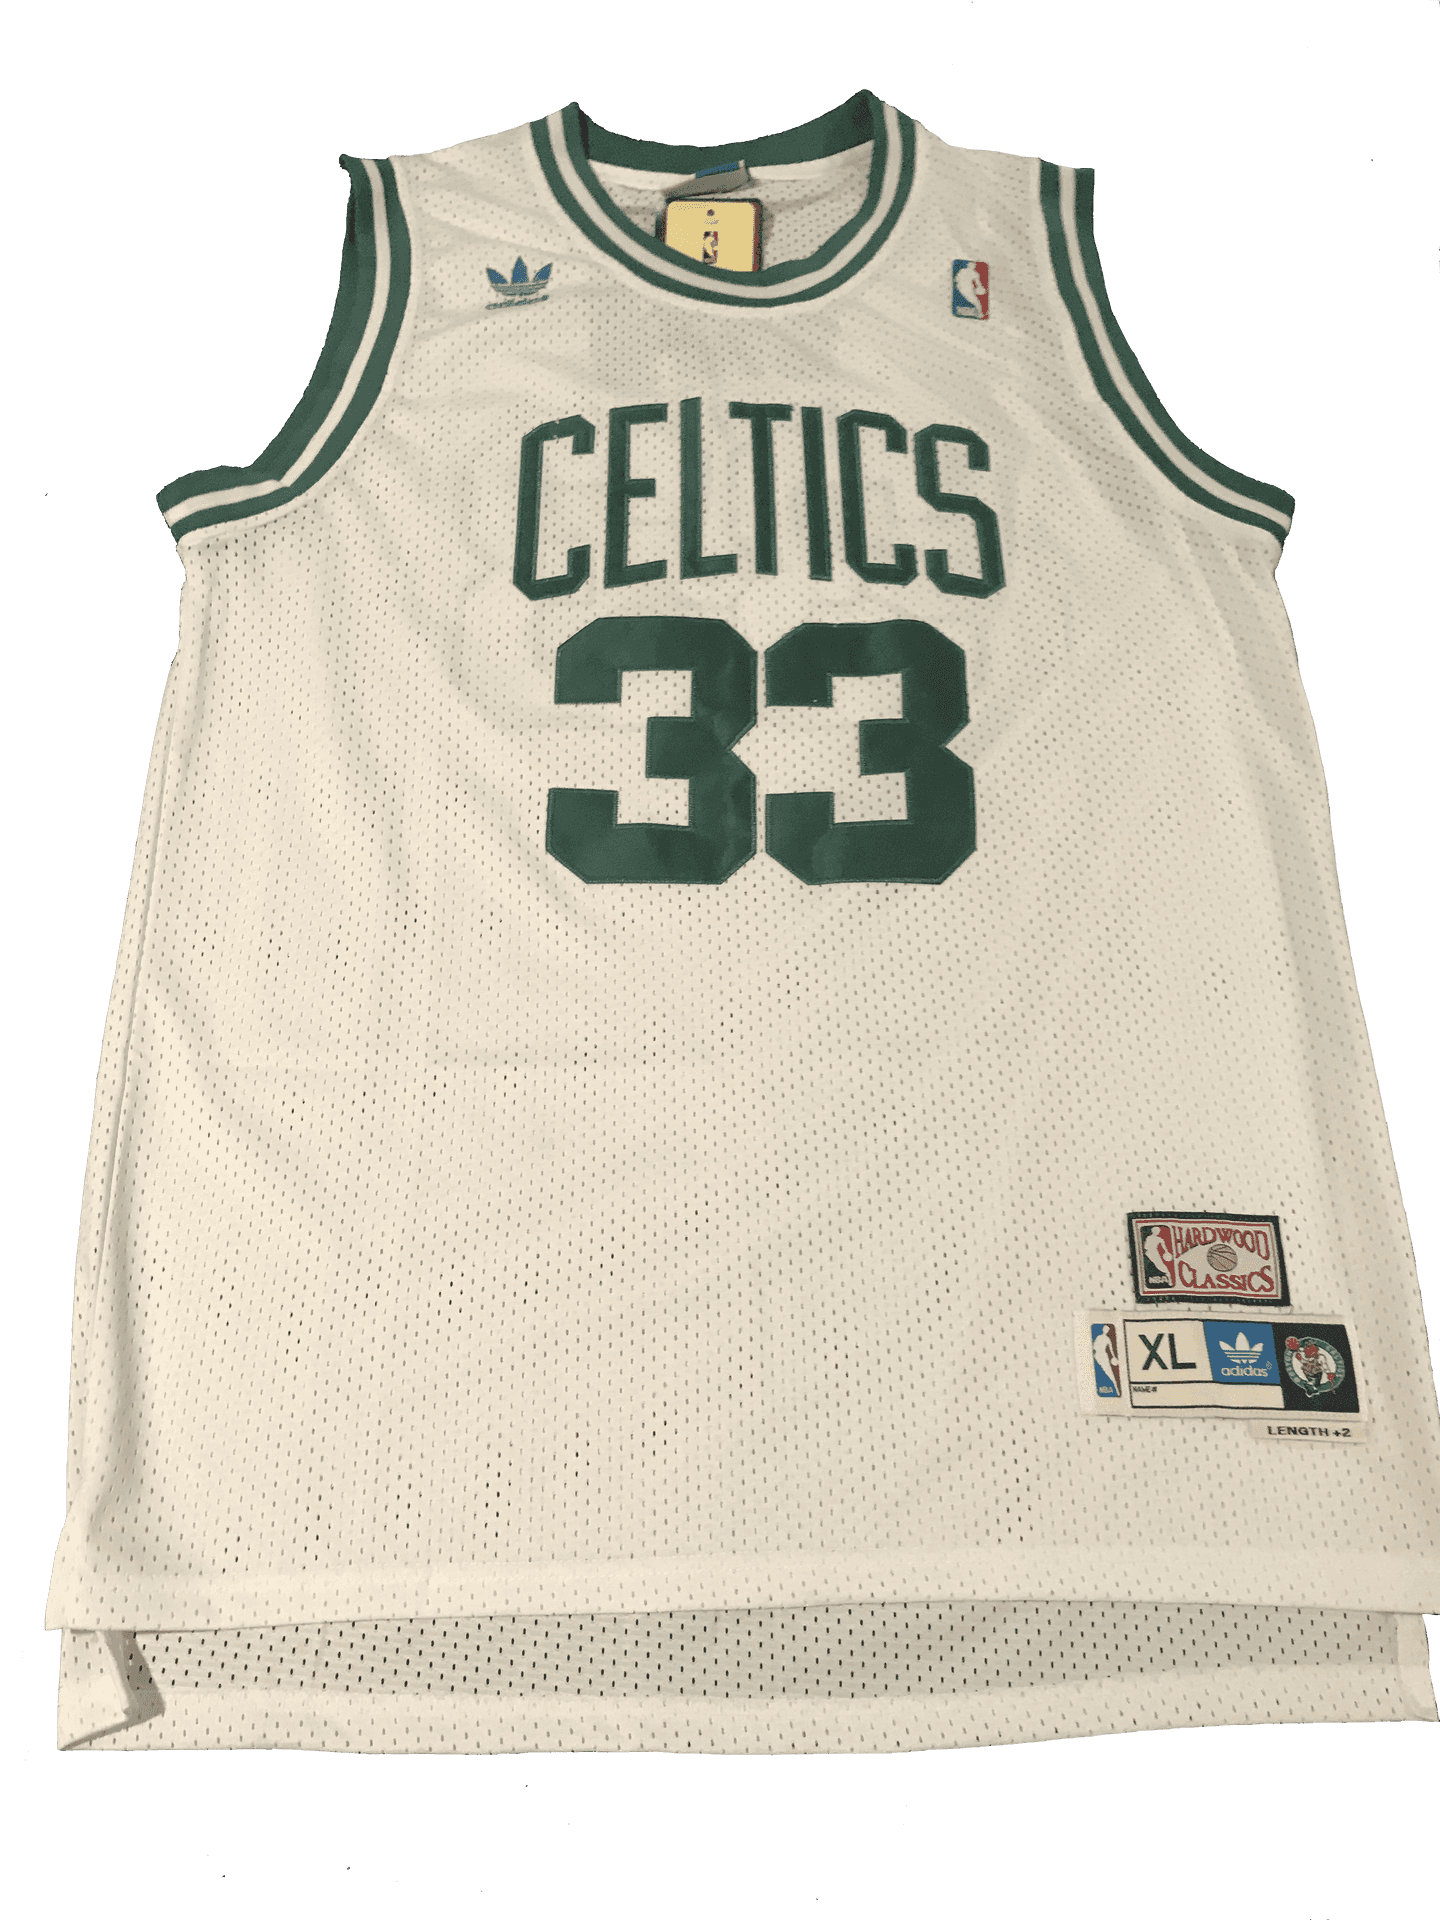 Celtics33 Basketball Jersey PNG